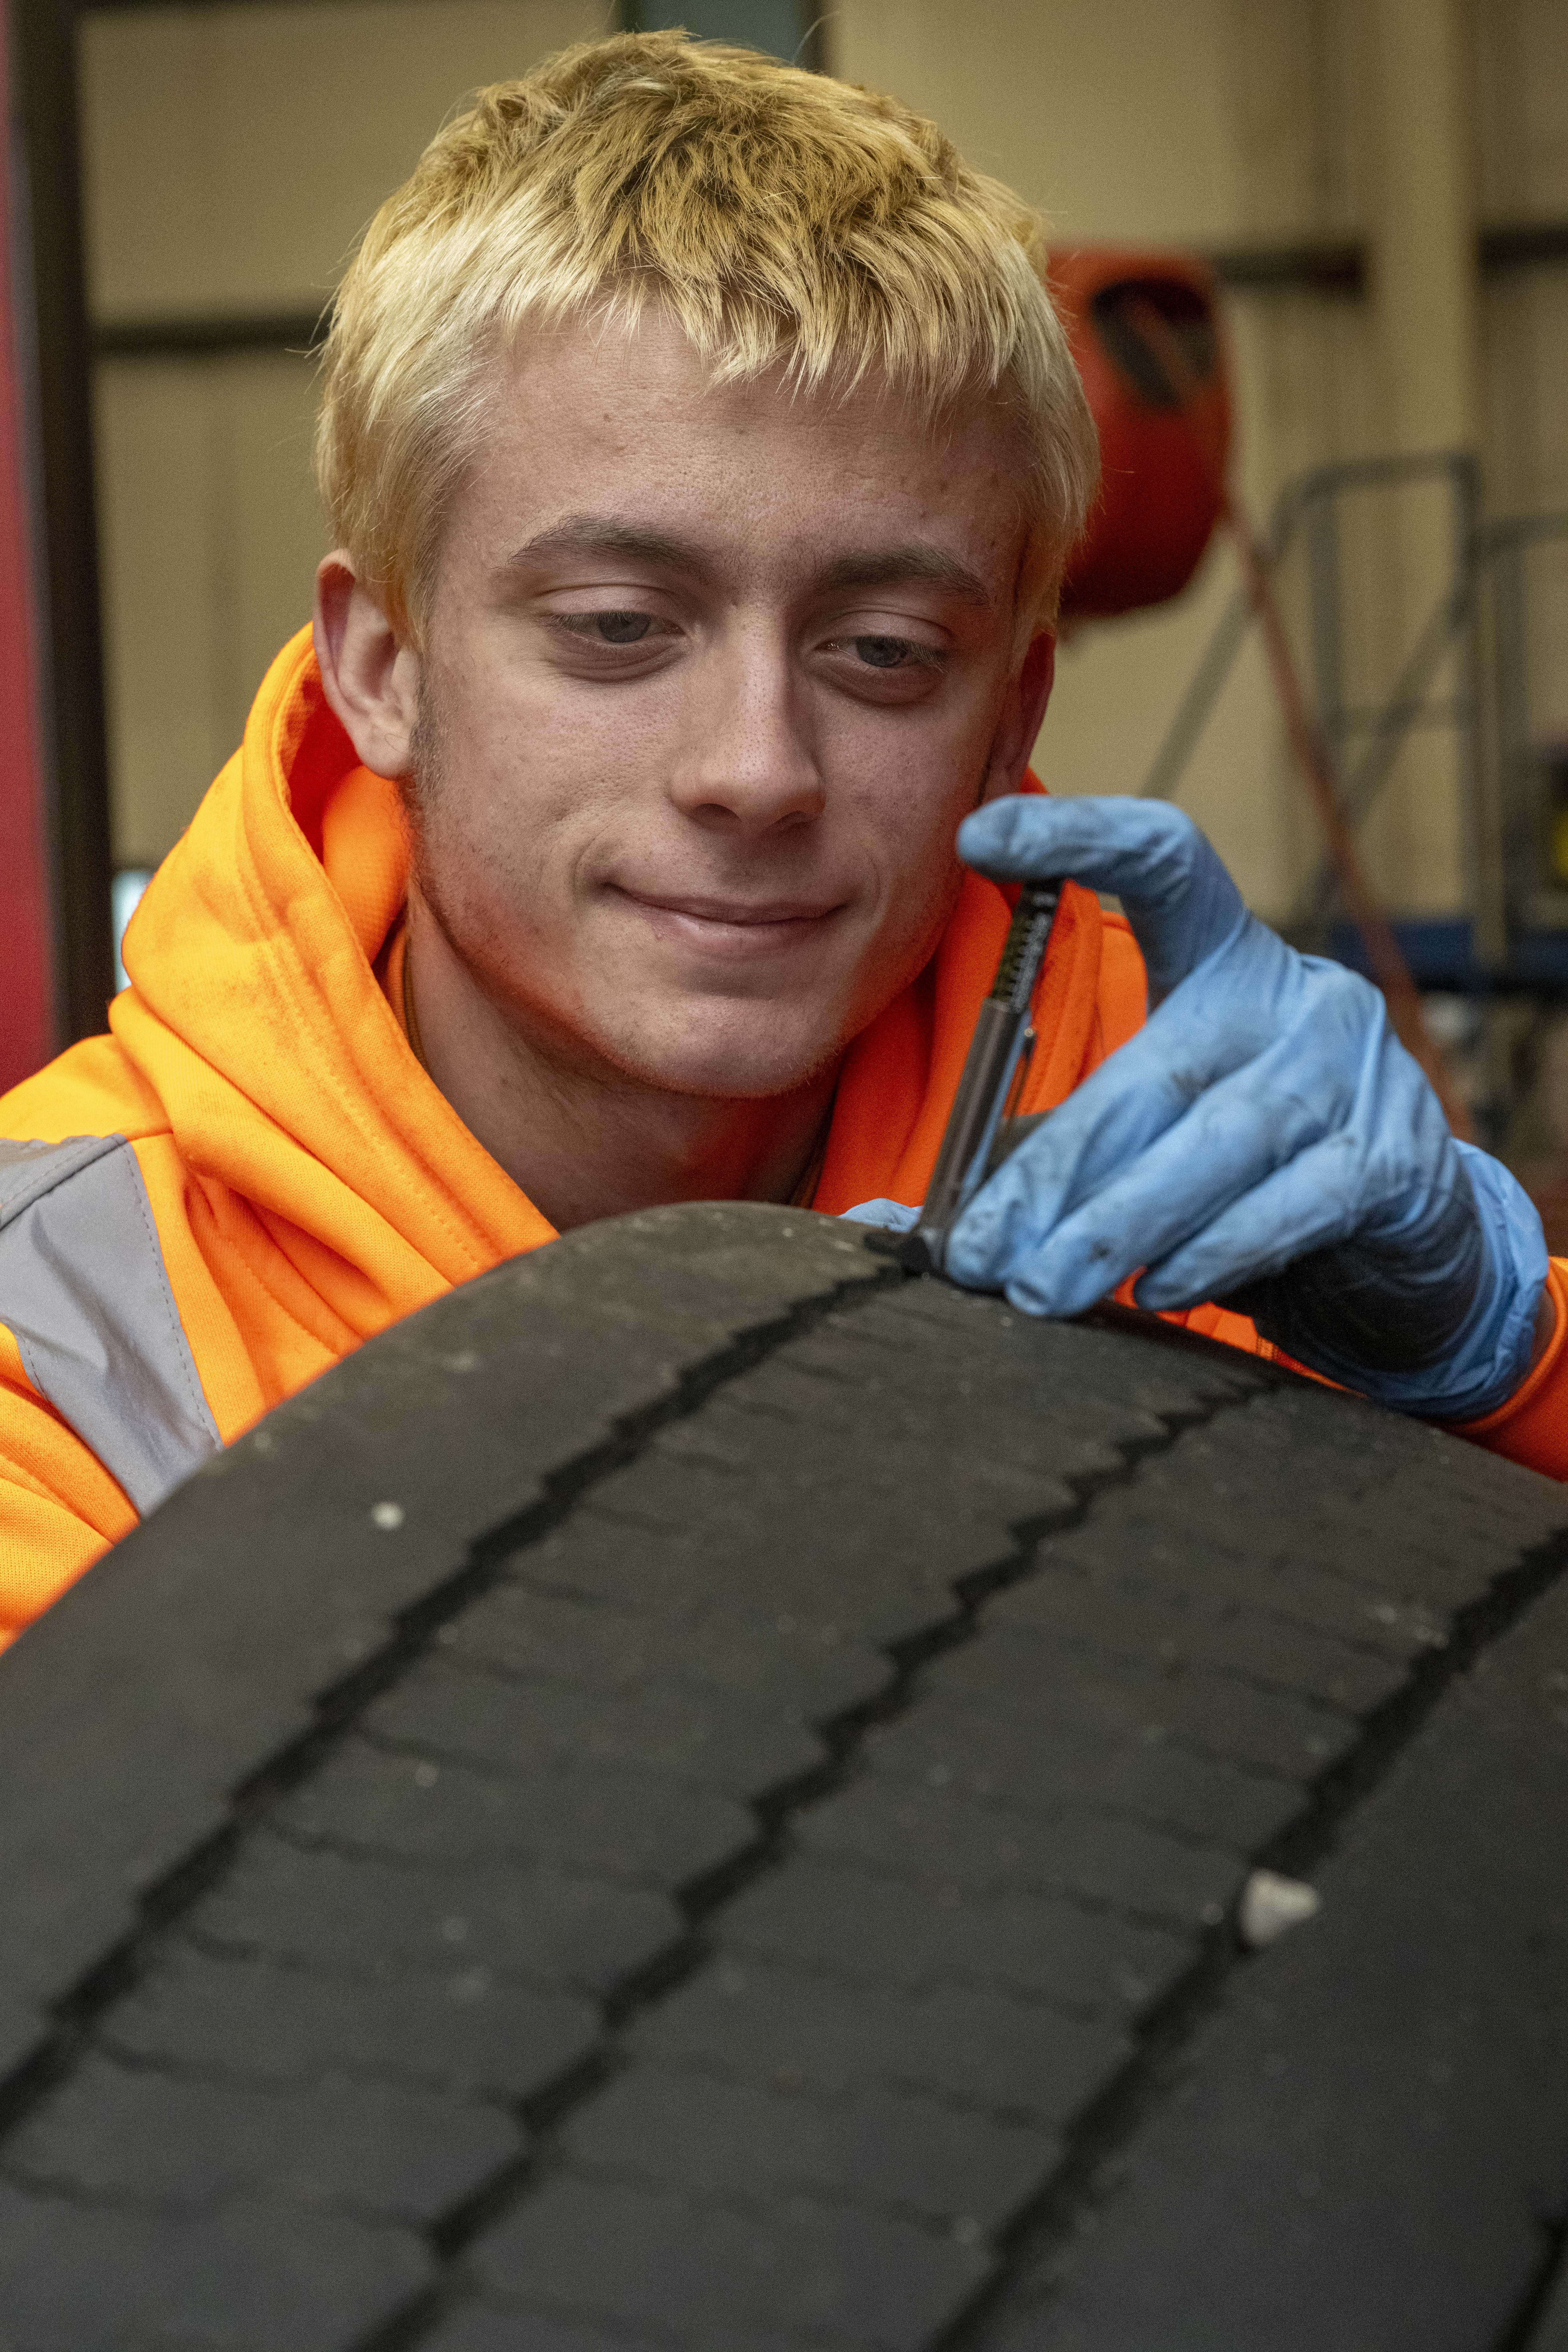 Zack checking tyre pressure